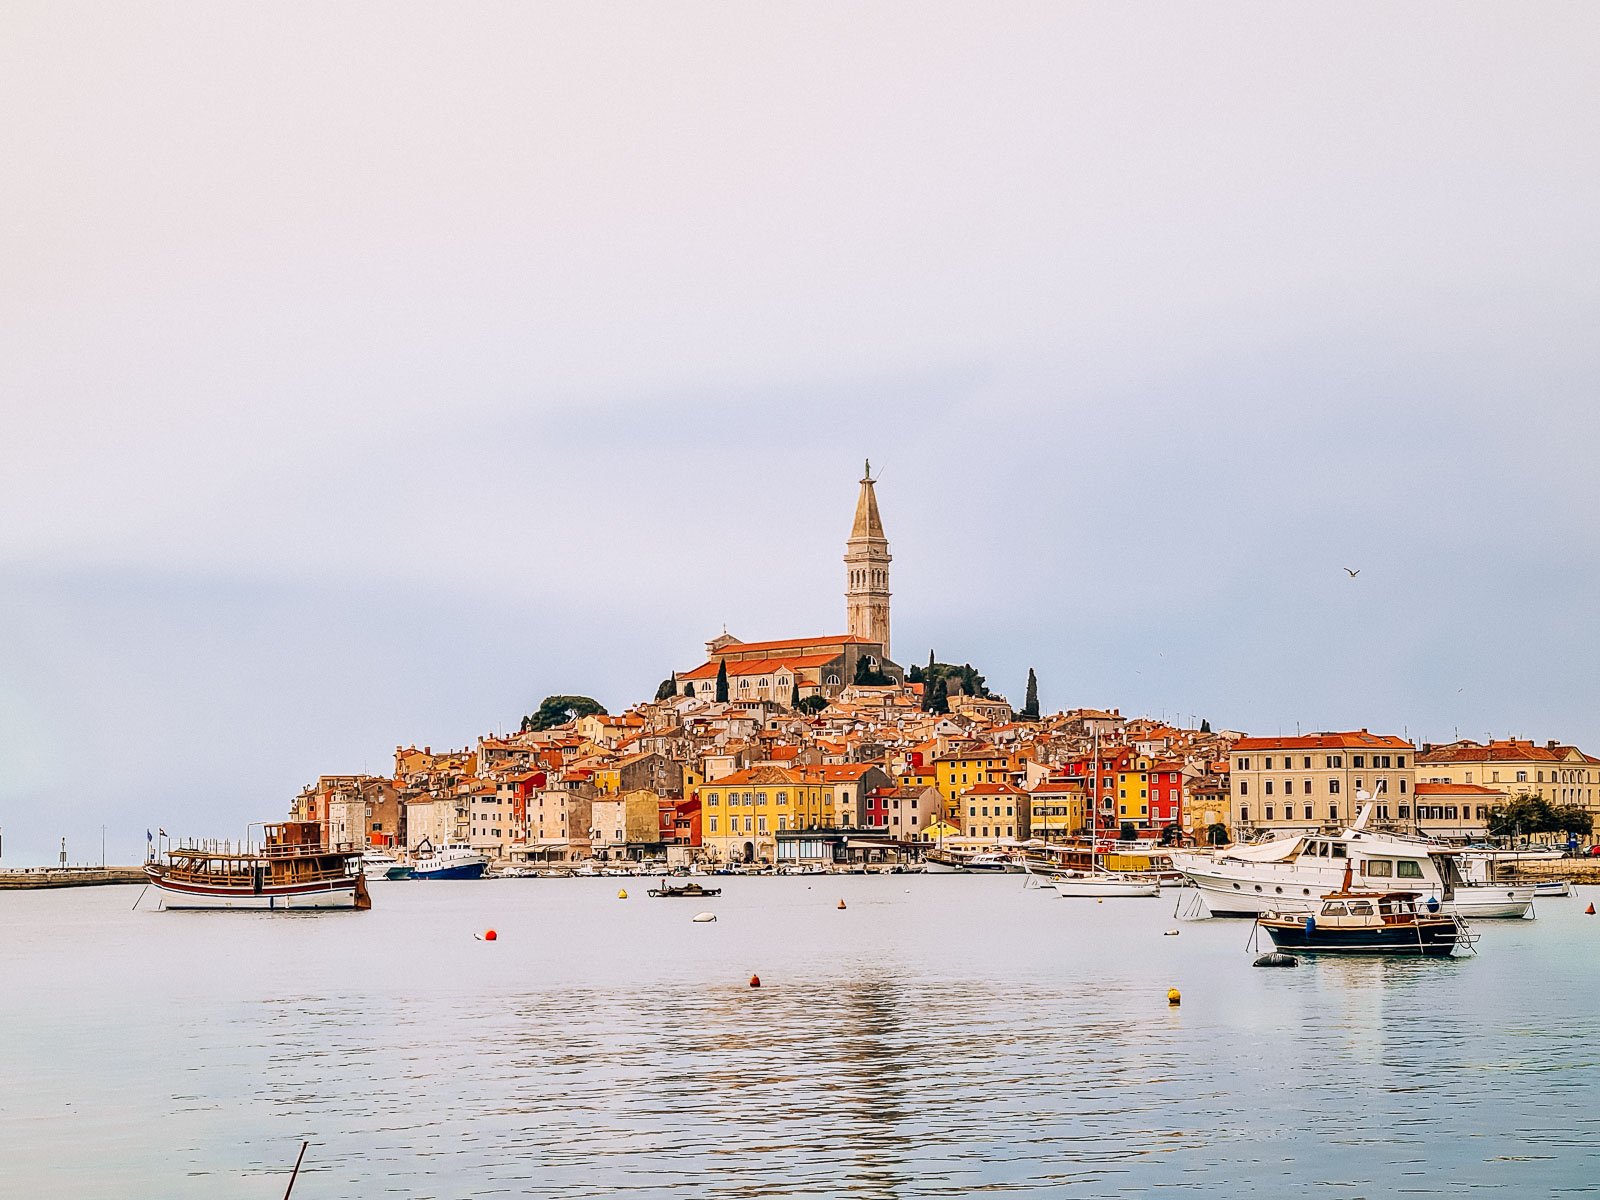 a colourful town on a peninsula that looks like an island - rovinj croatia